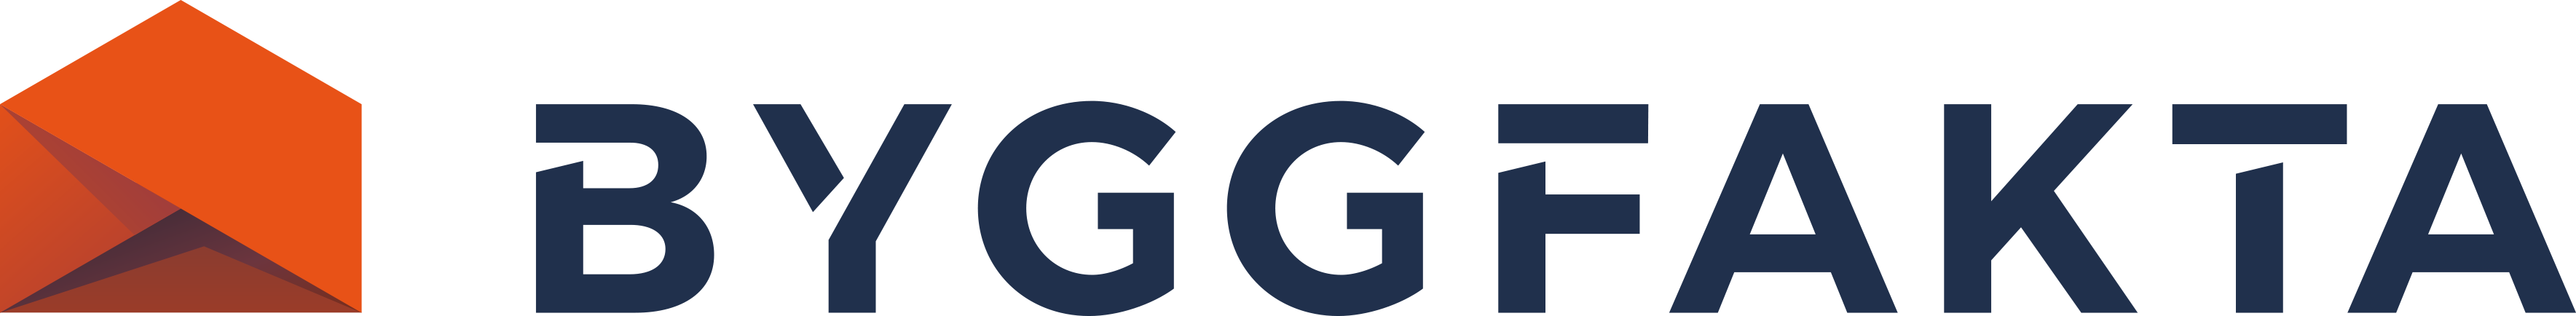 Byggfakta logo - RGB-orange